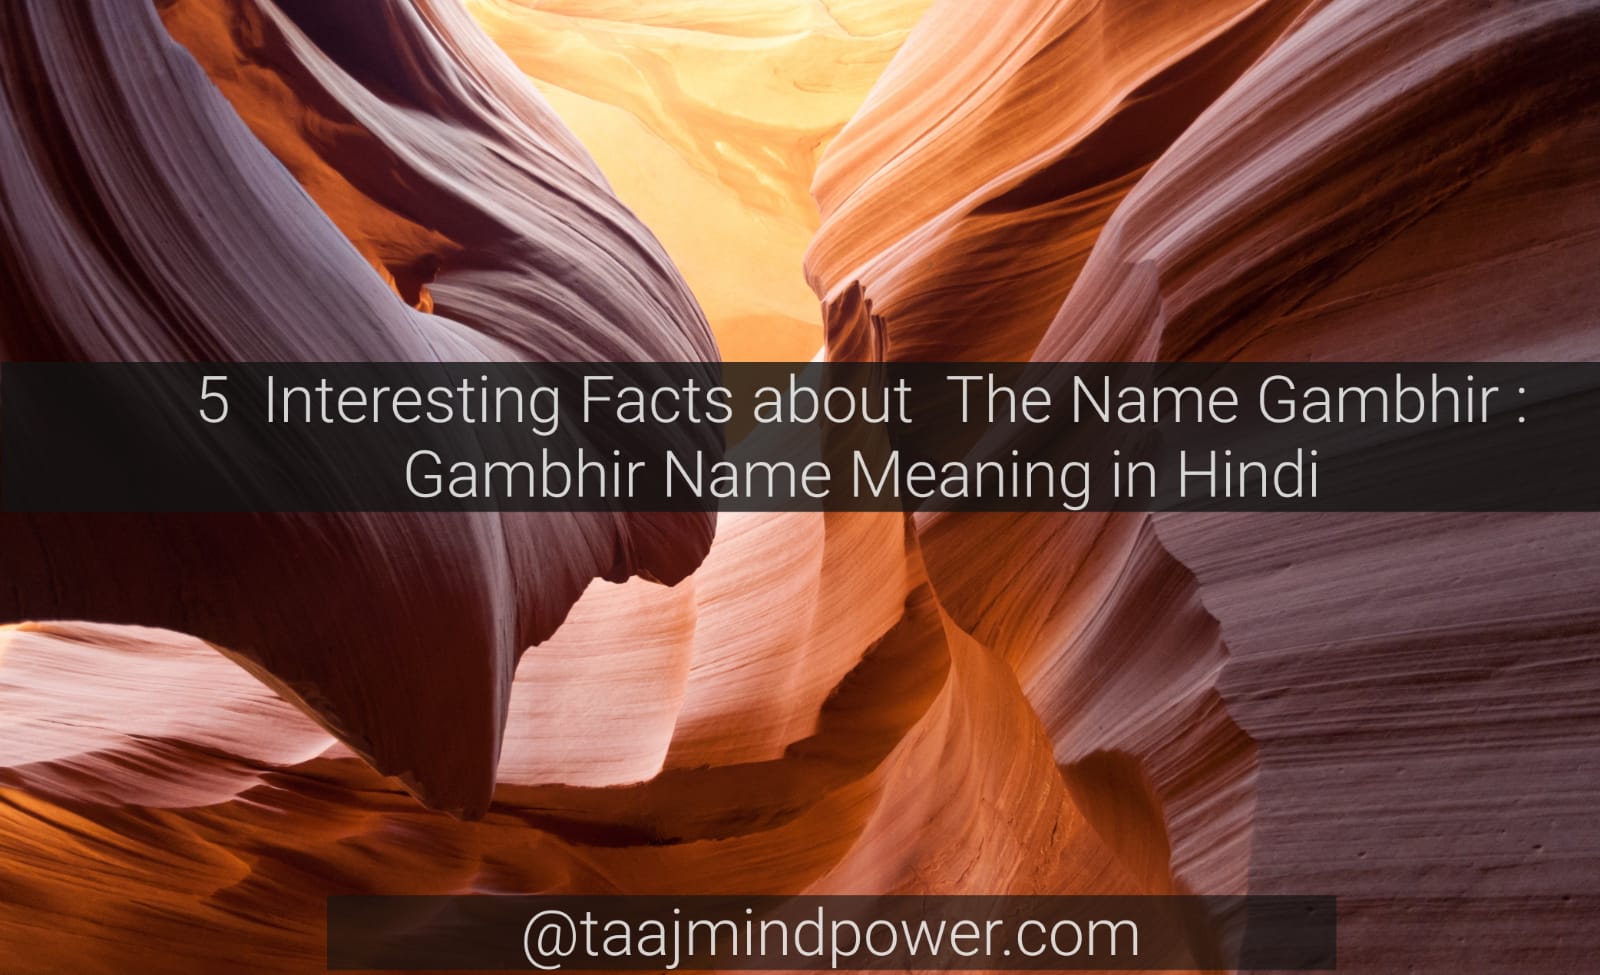 Gambhir Name Meaning in Hindi